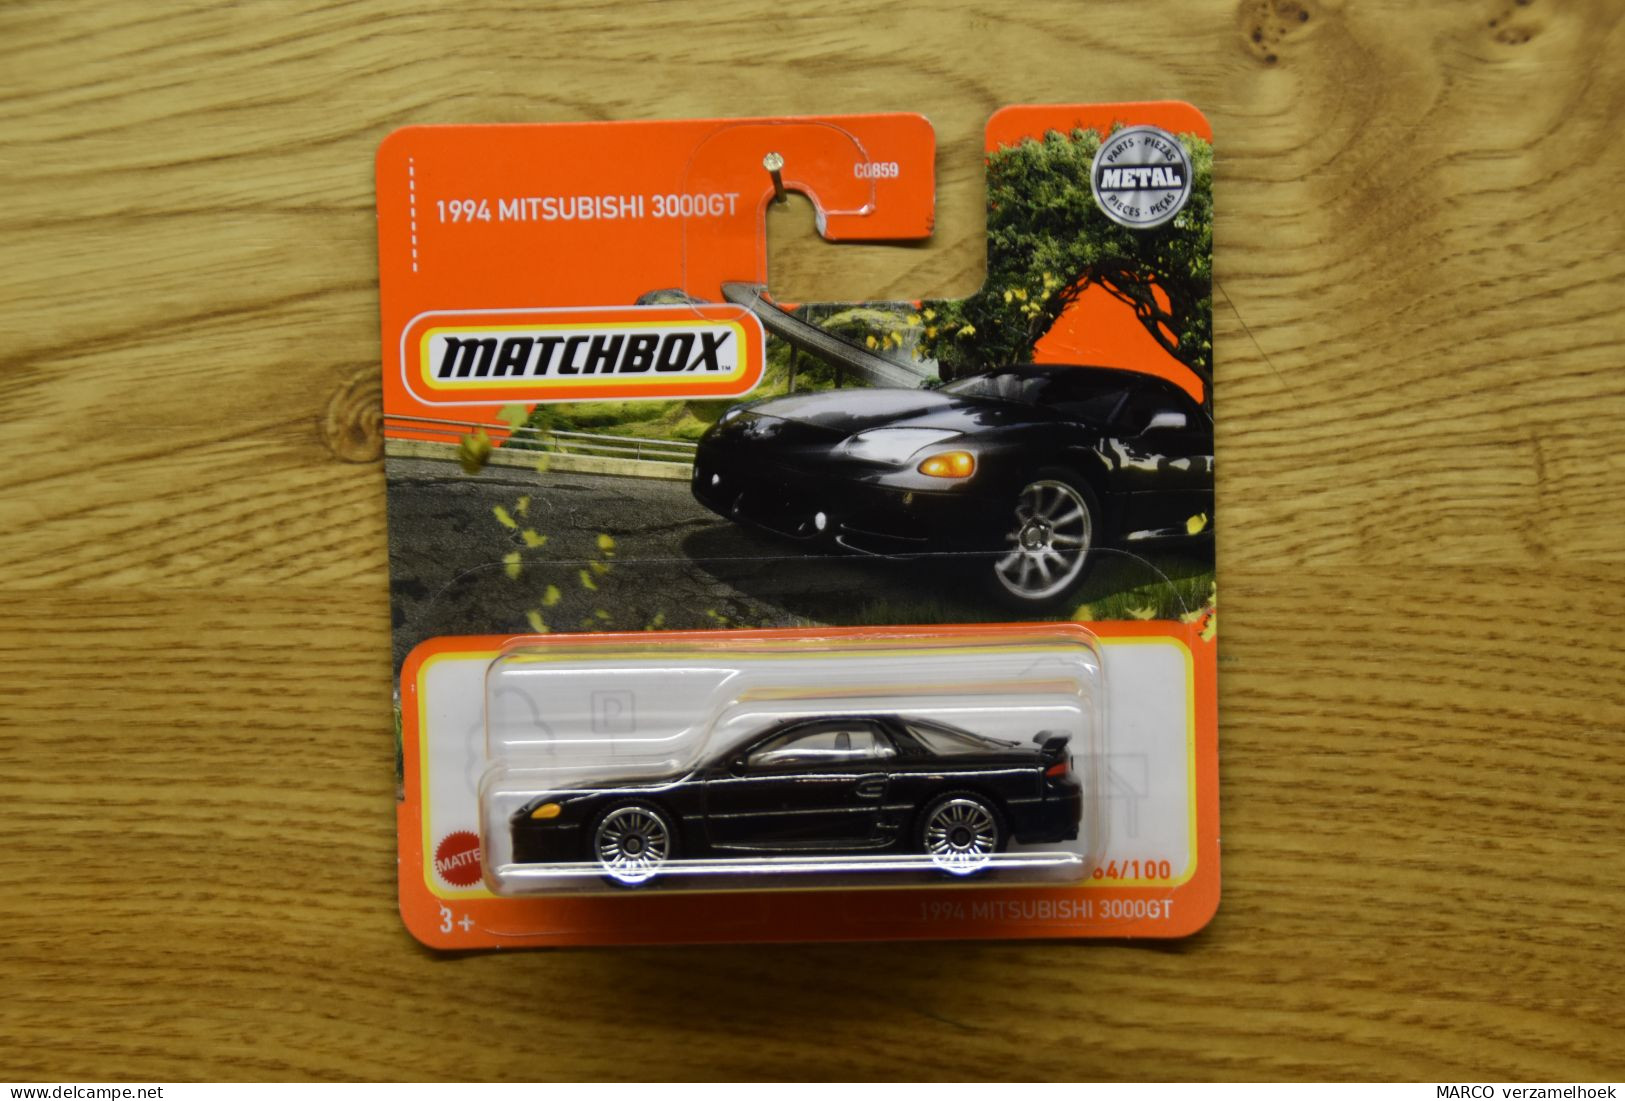 Mattel - Matchbox 64/100 1994 Mitsubishi 3000 GT - Matchbox (Mattel)